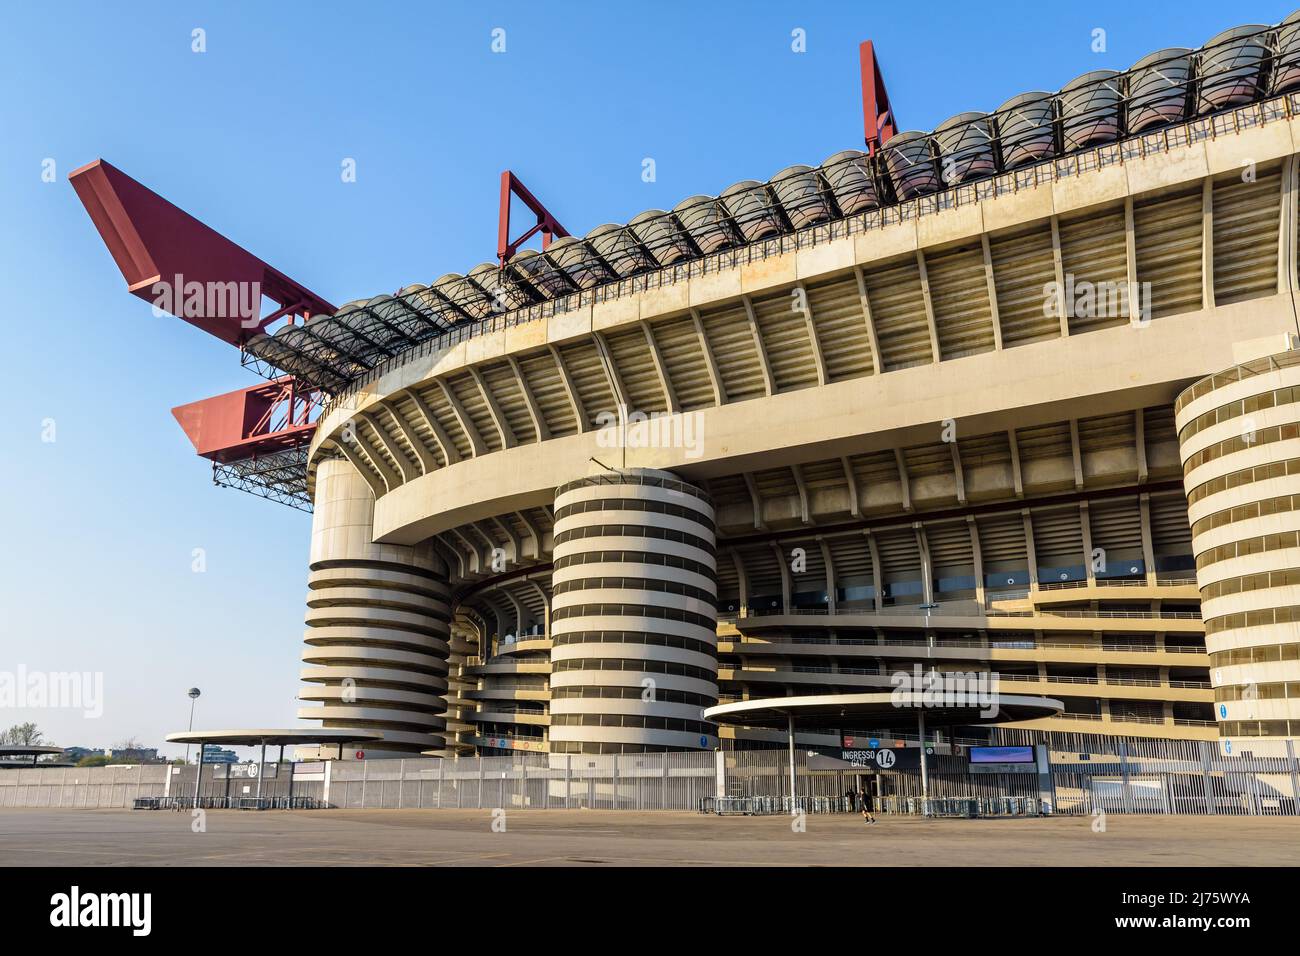 Ac milan stadium hi-res stock photography and images - Alamy